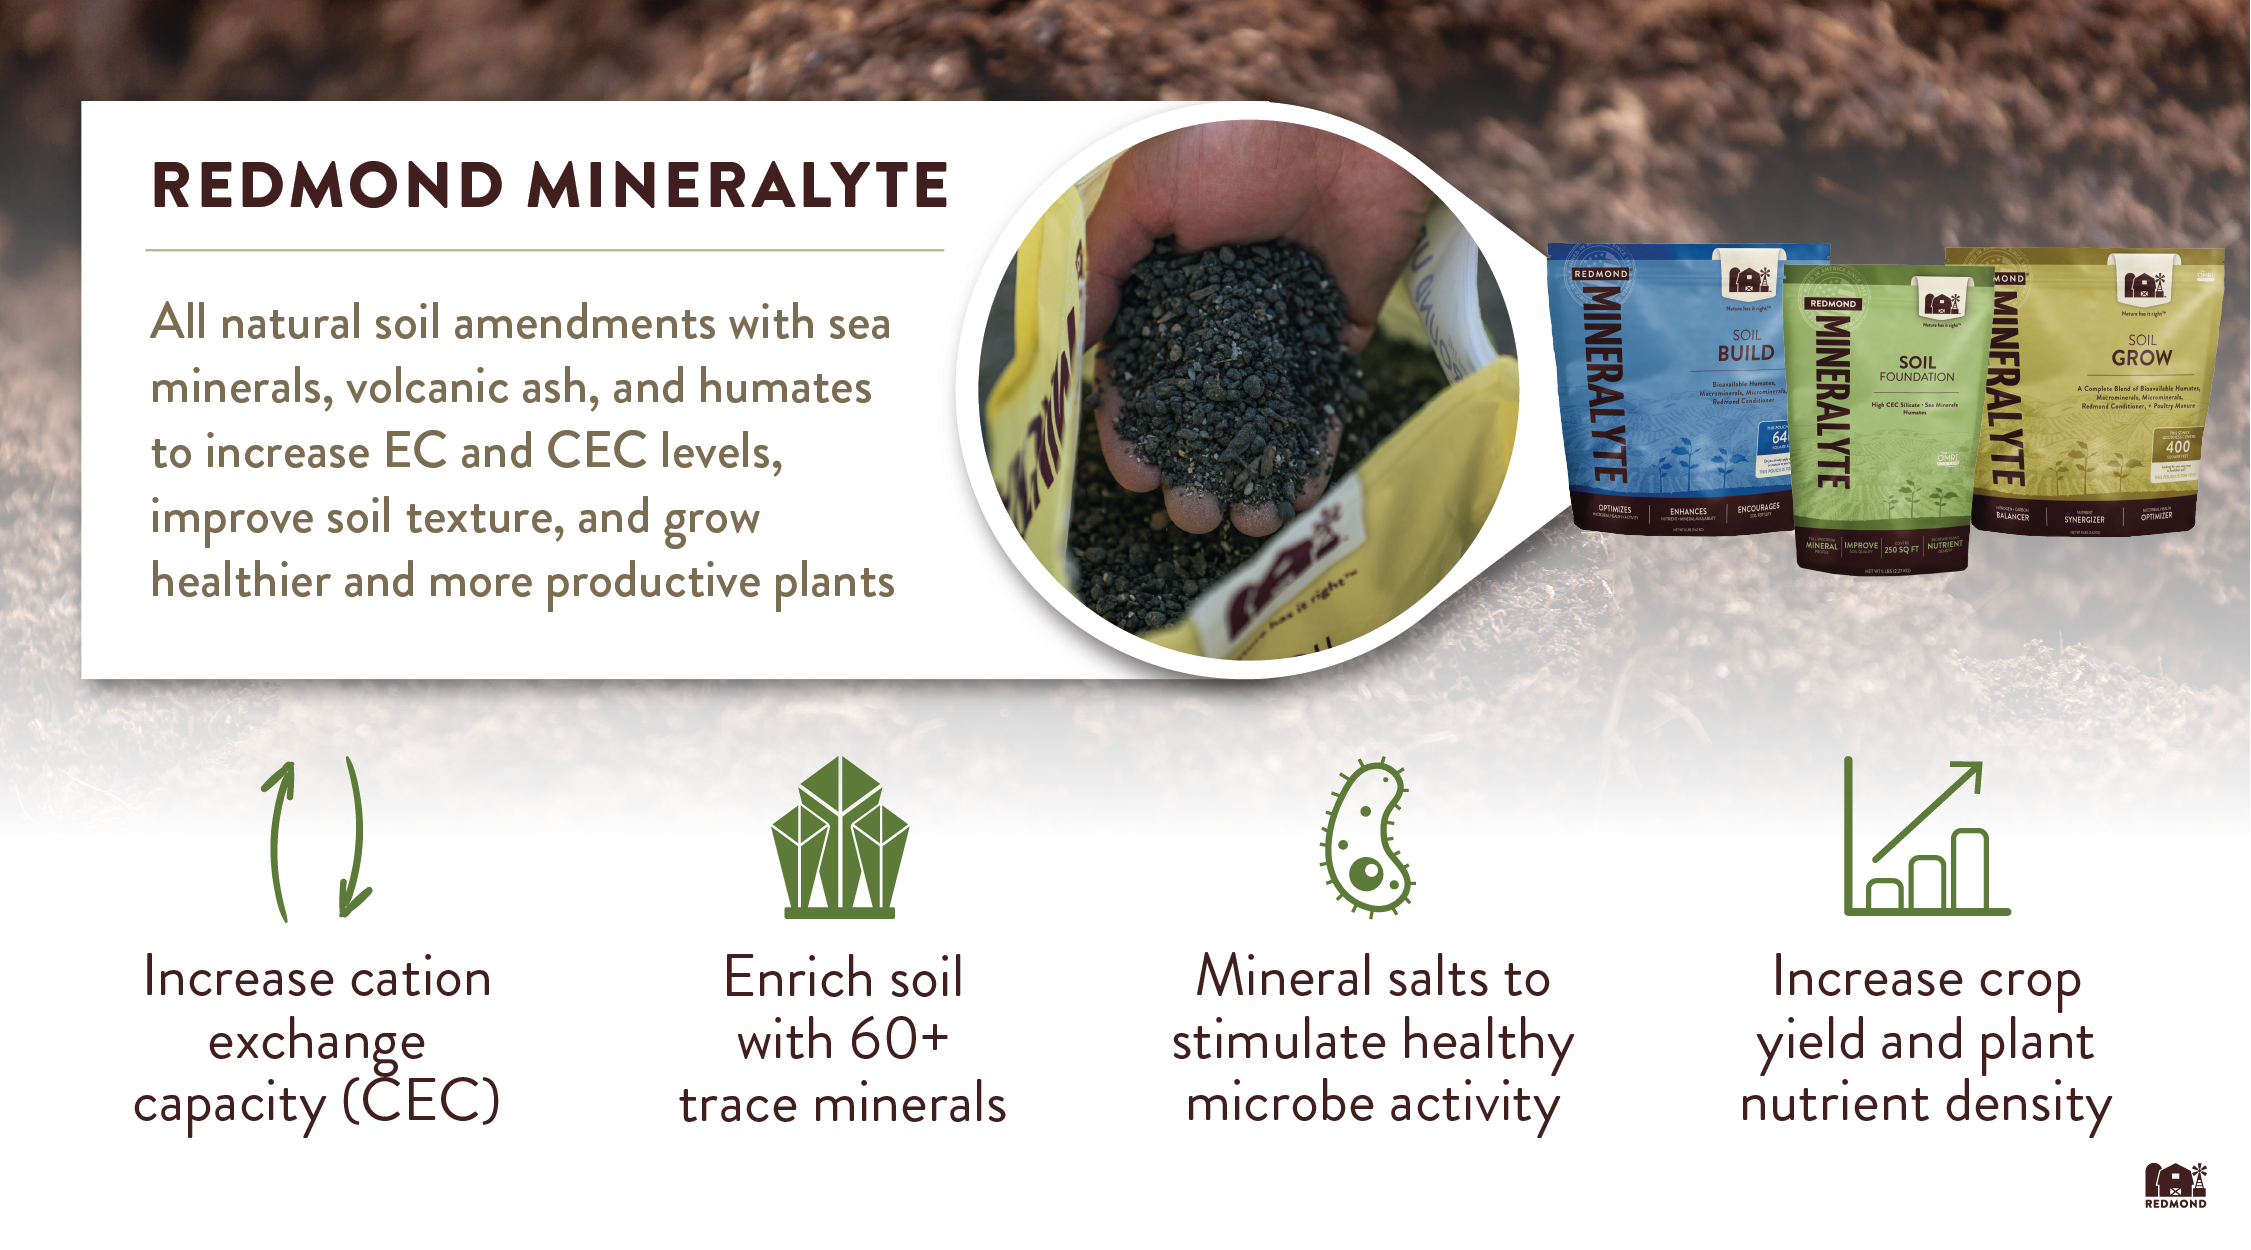 Redmond Mineralyte improve soil